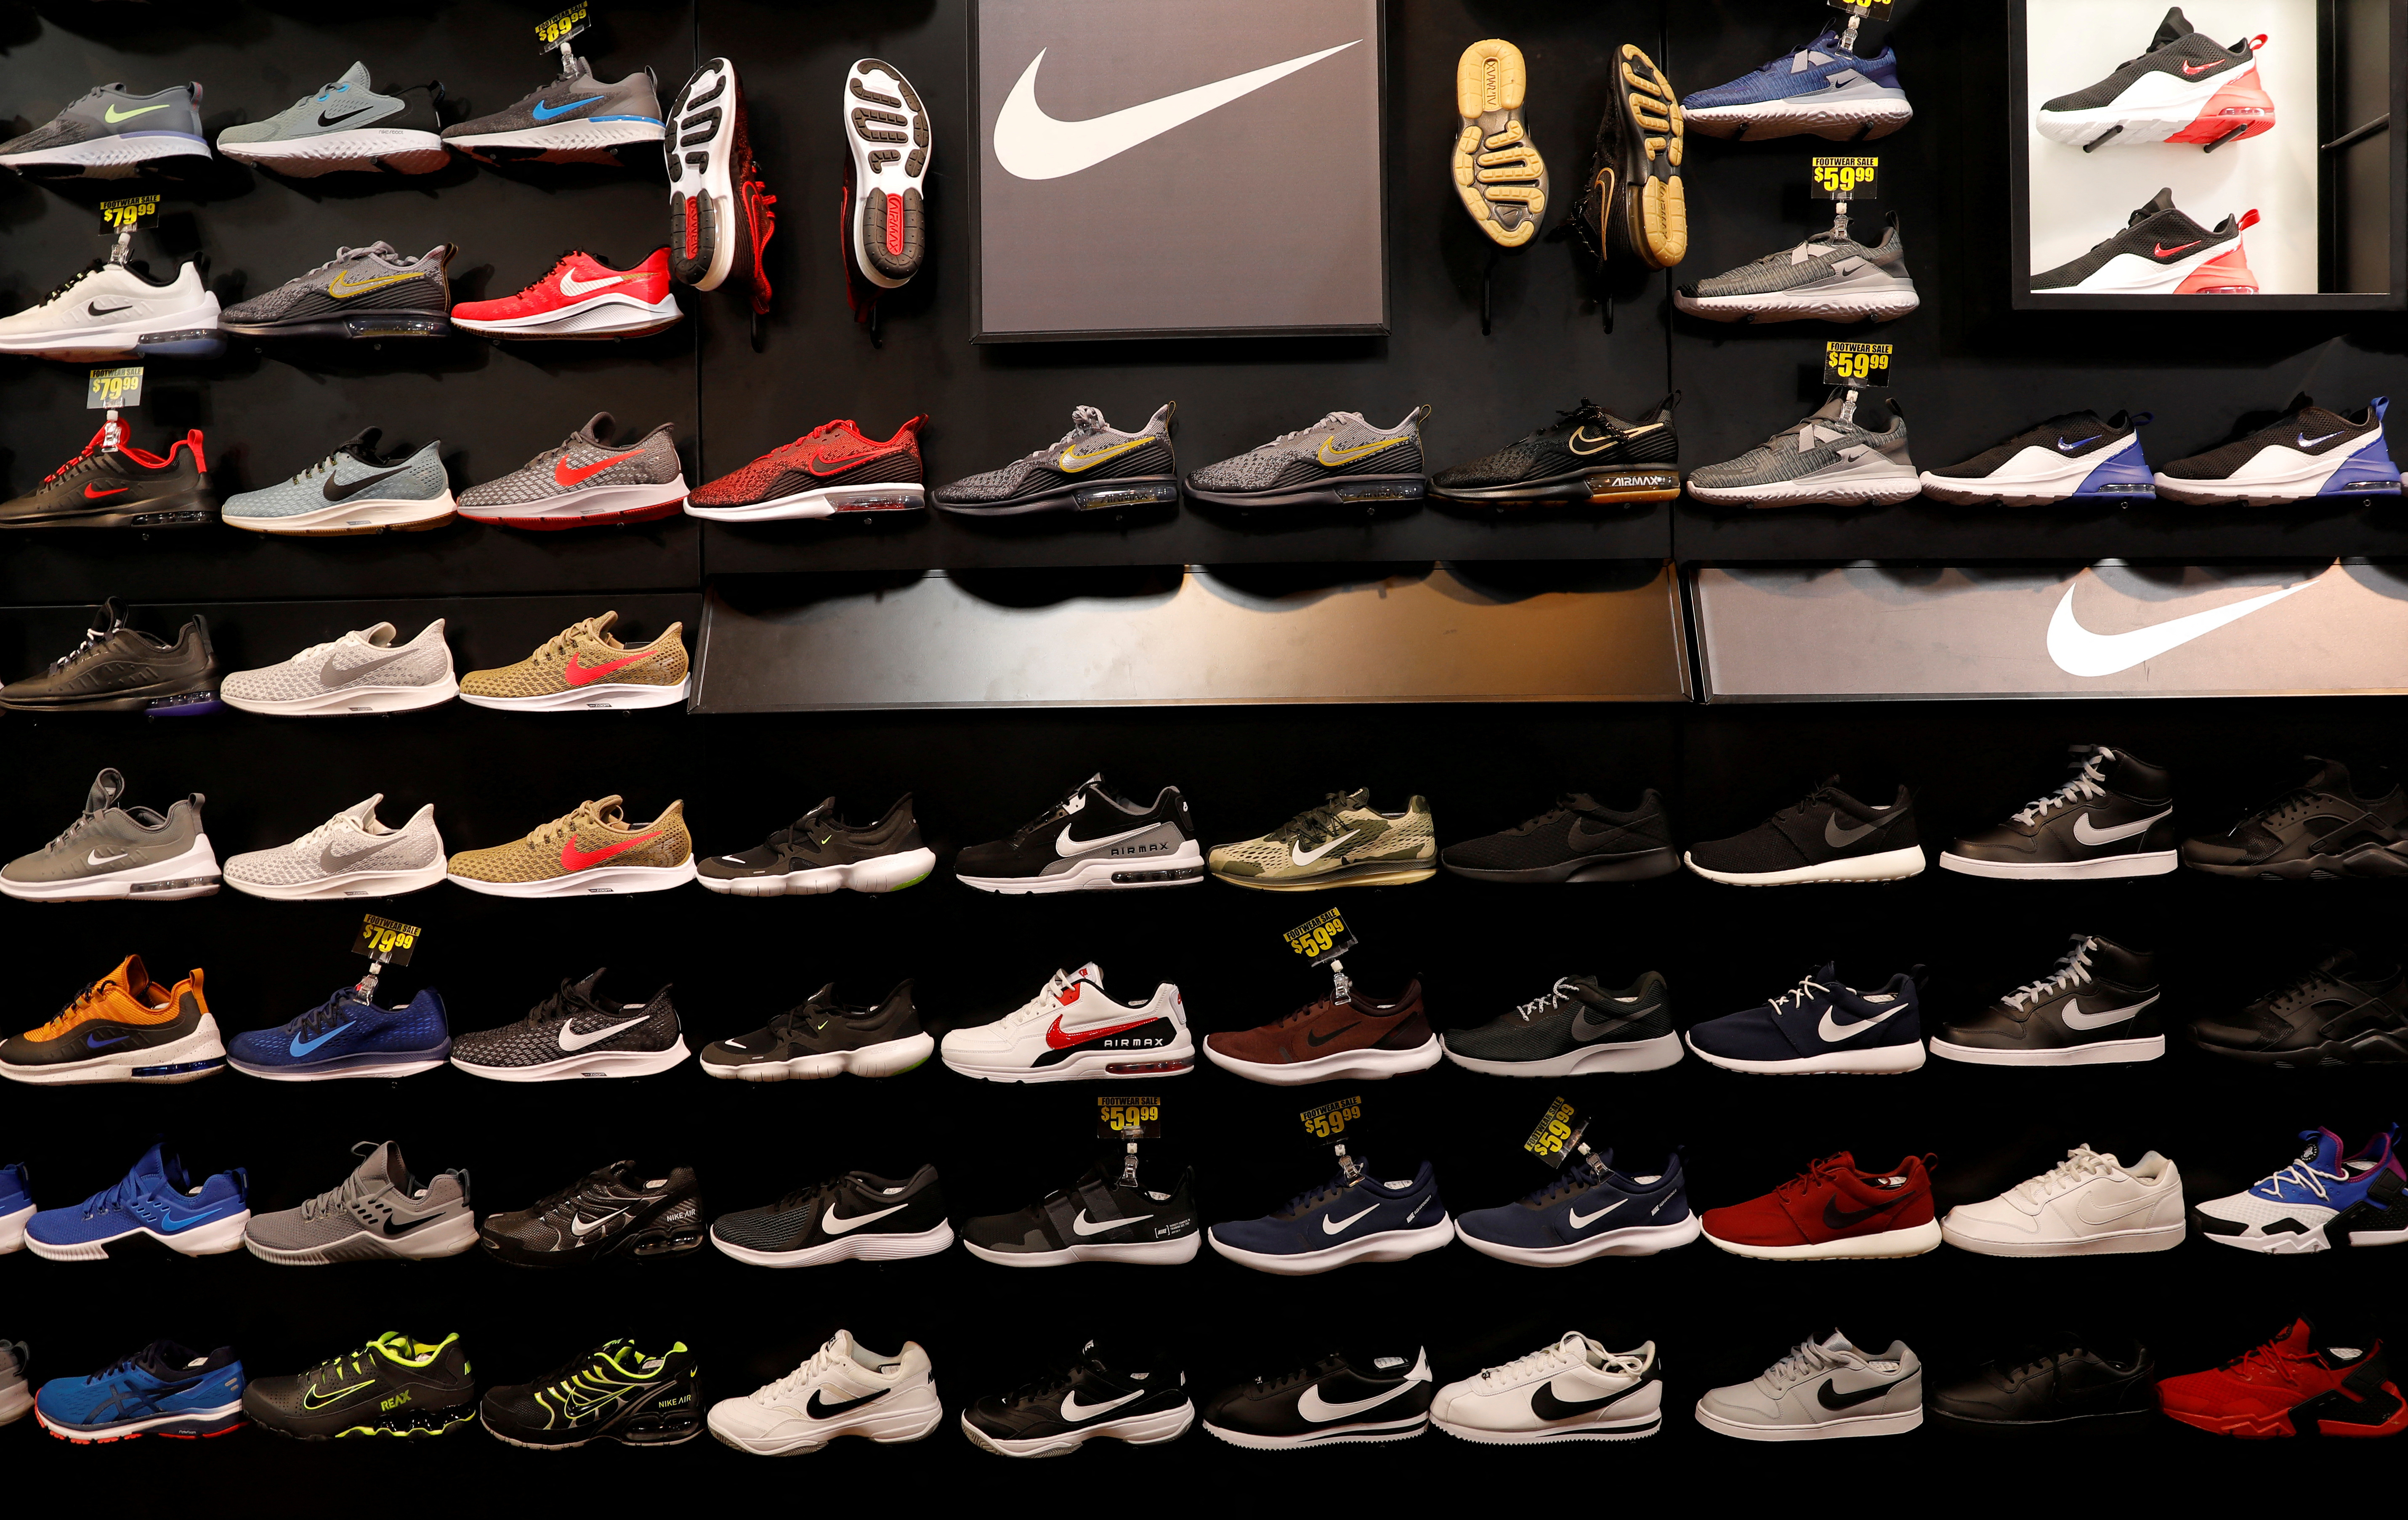 Nike Set 